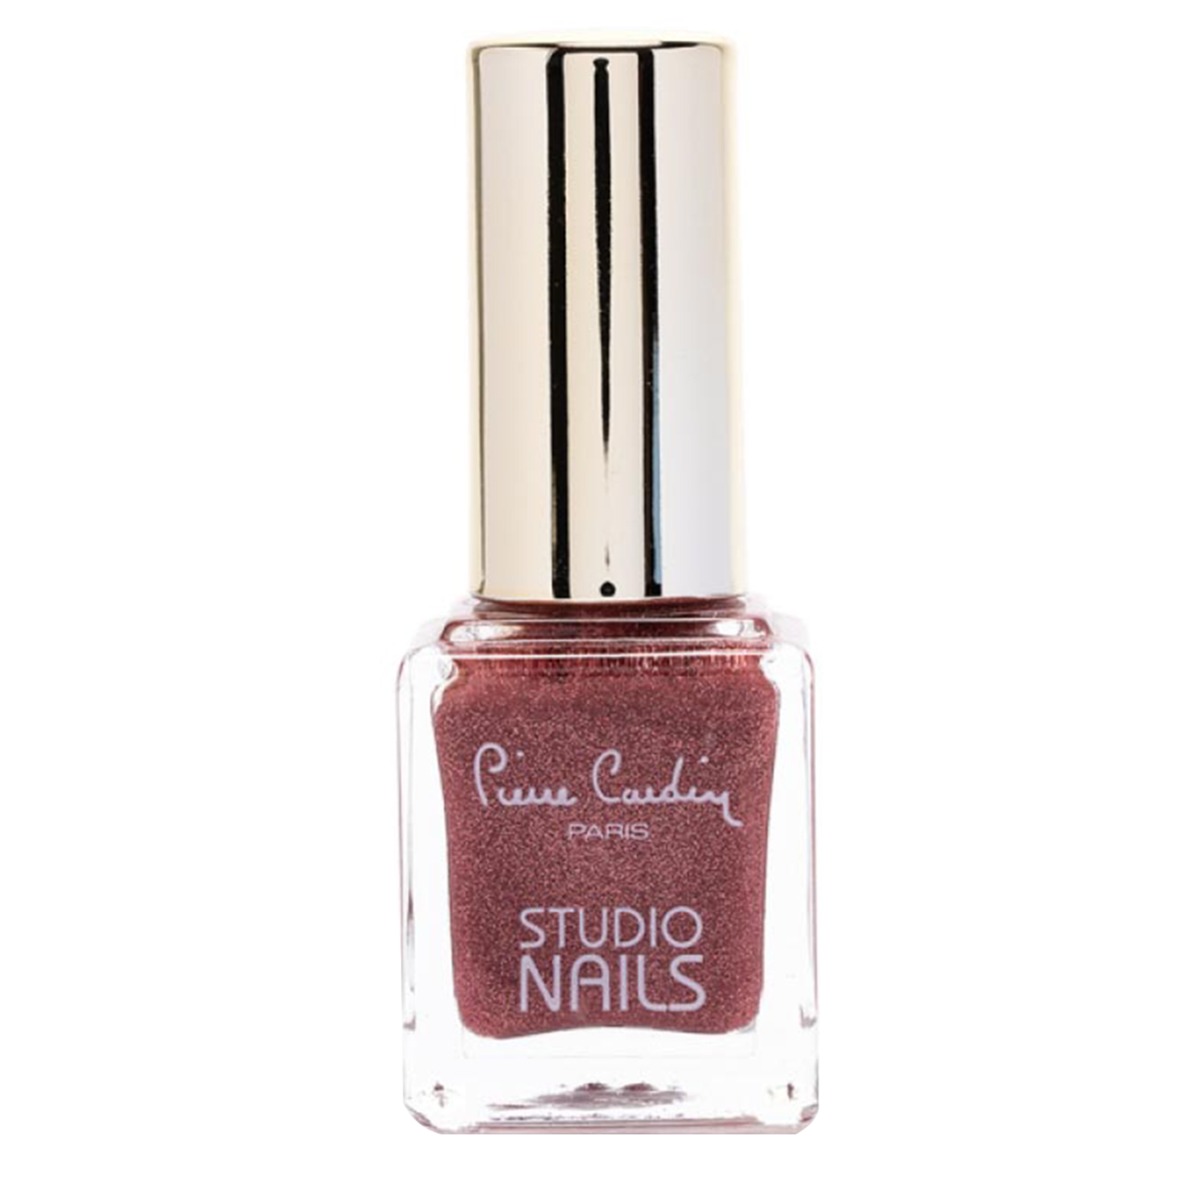 Pierre Cardin Paris - Studio Nails, 11.5ml-92 - Medium Pink